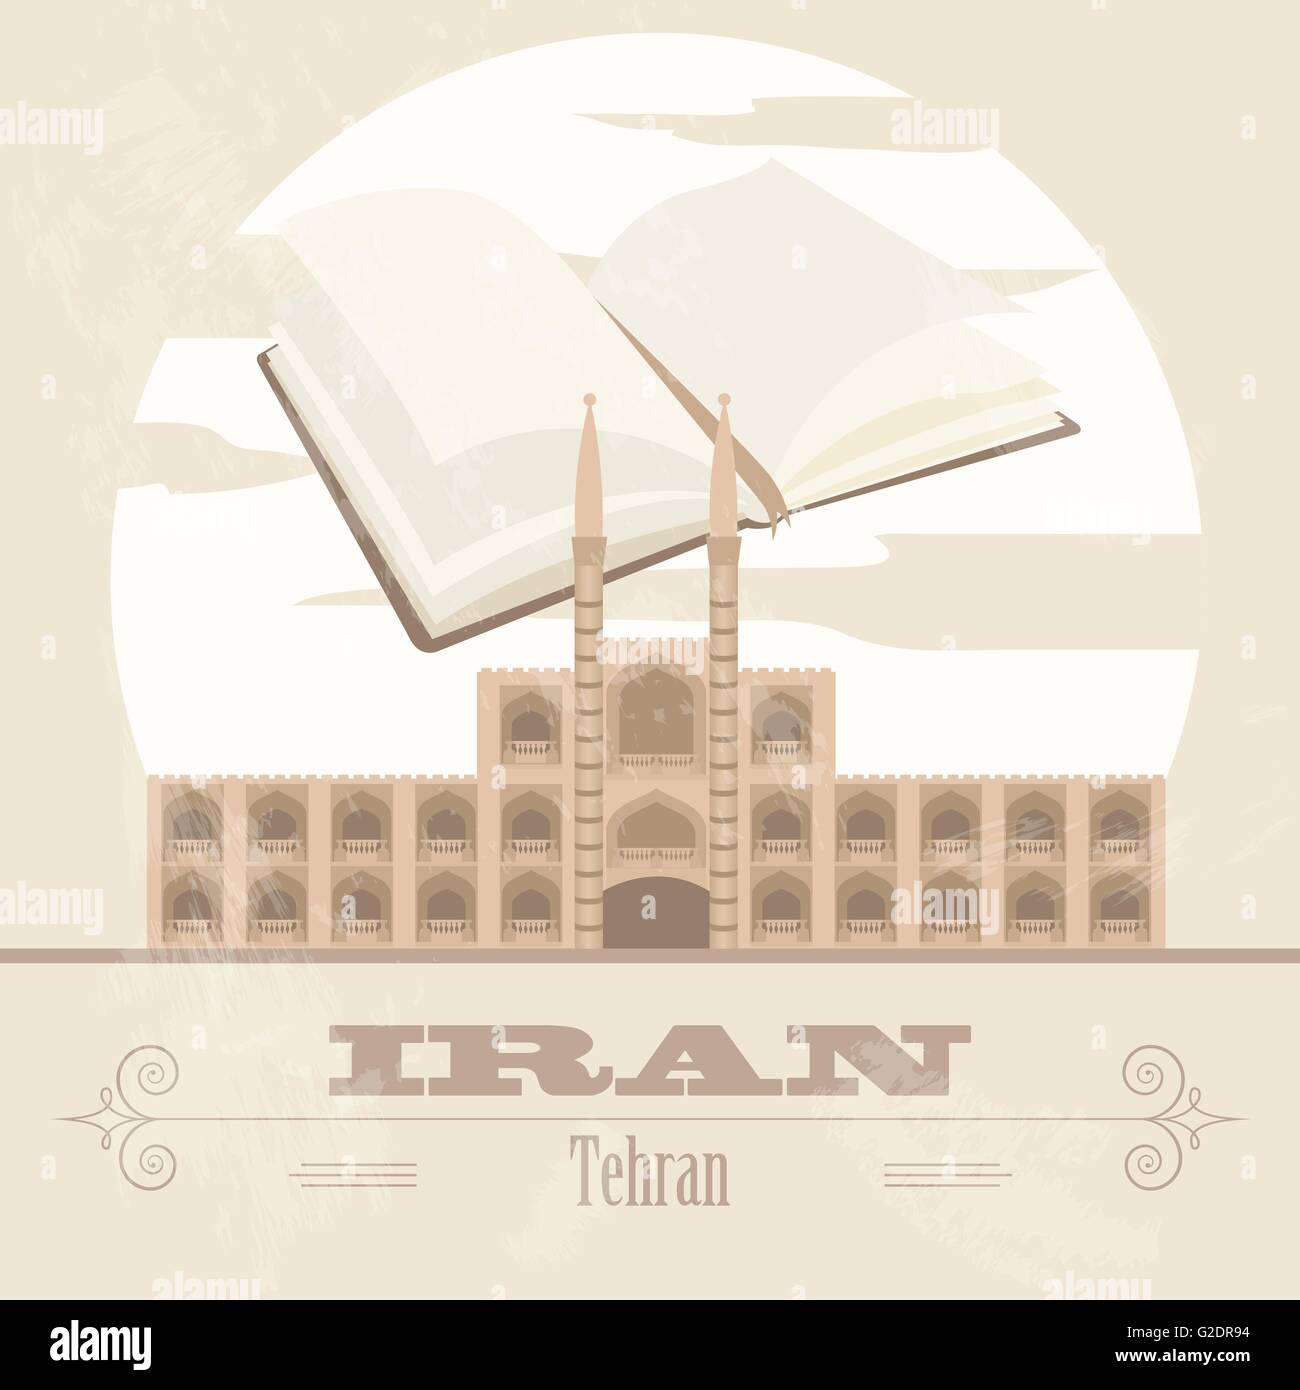 Iran. Retro styled image. Vector illustration Stock Vector